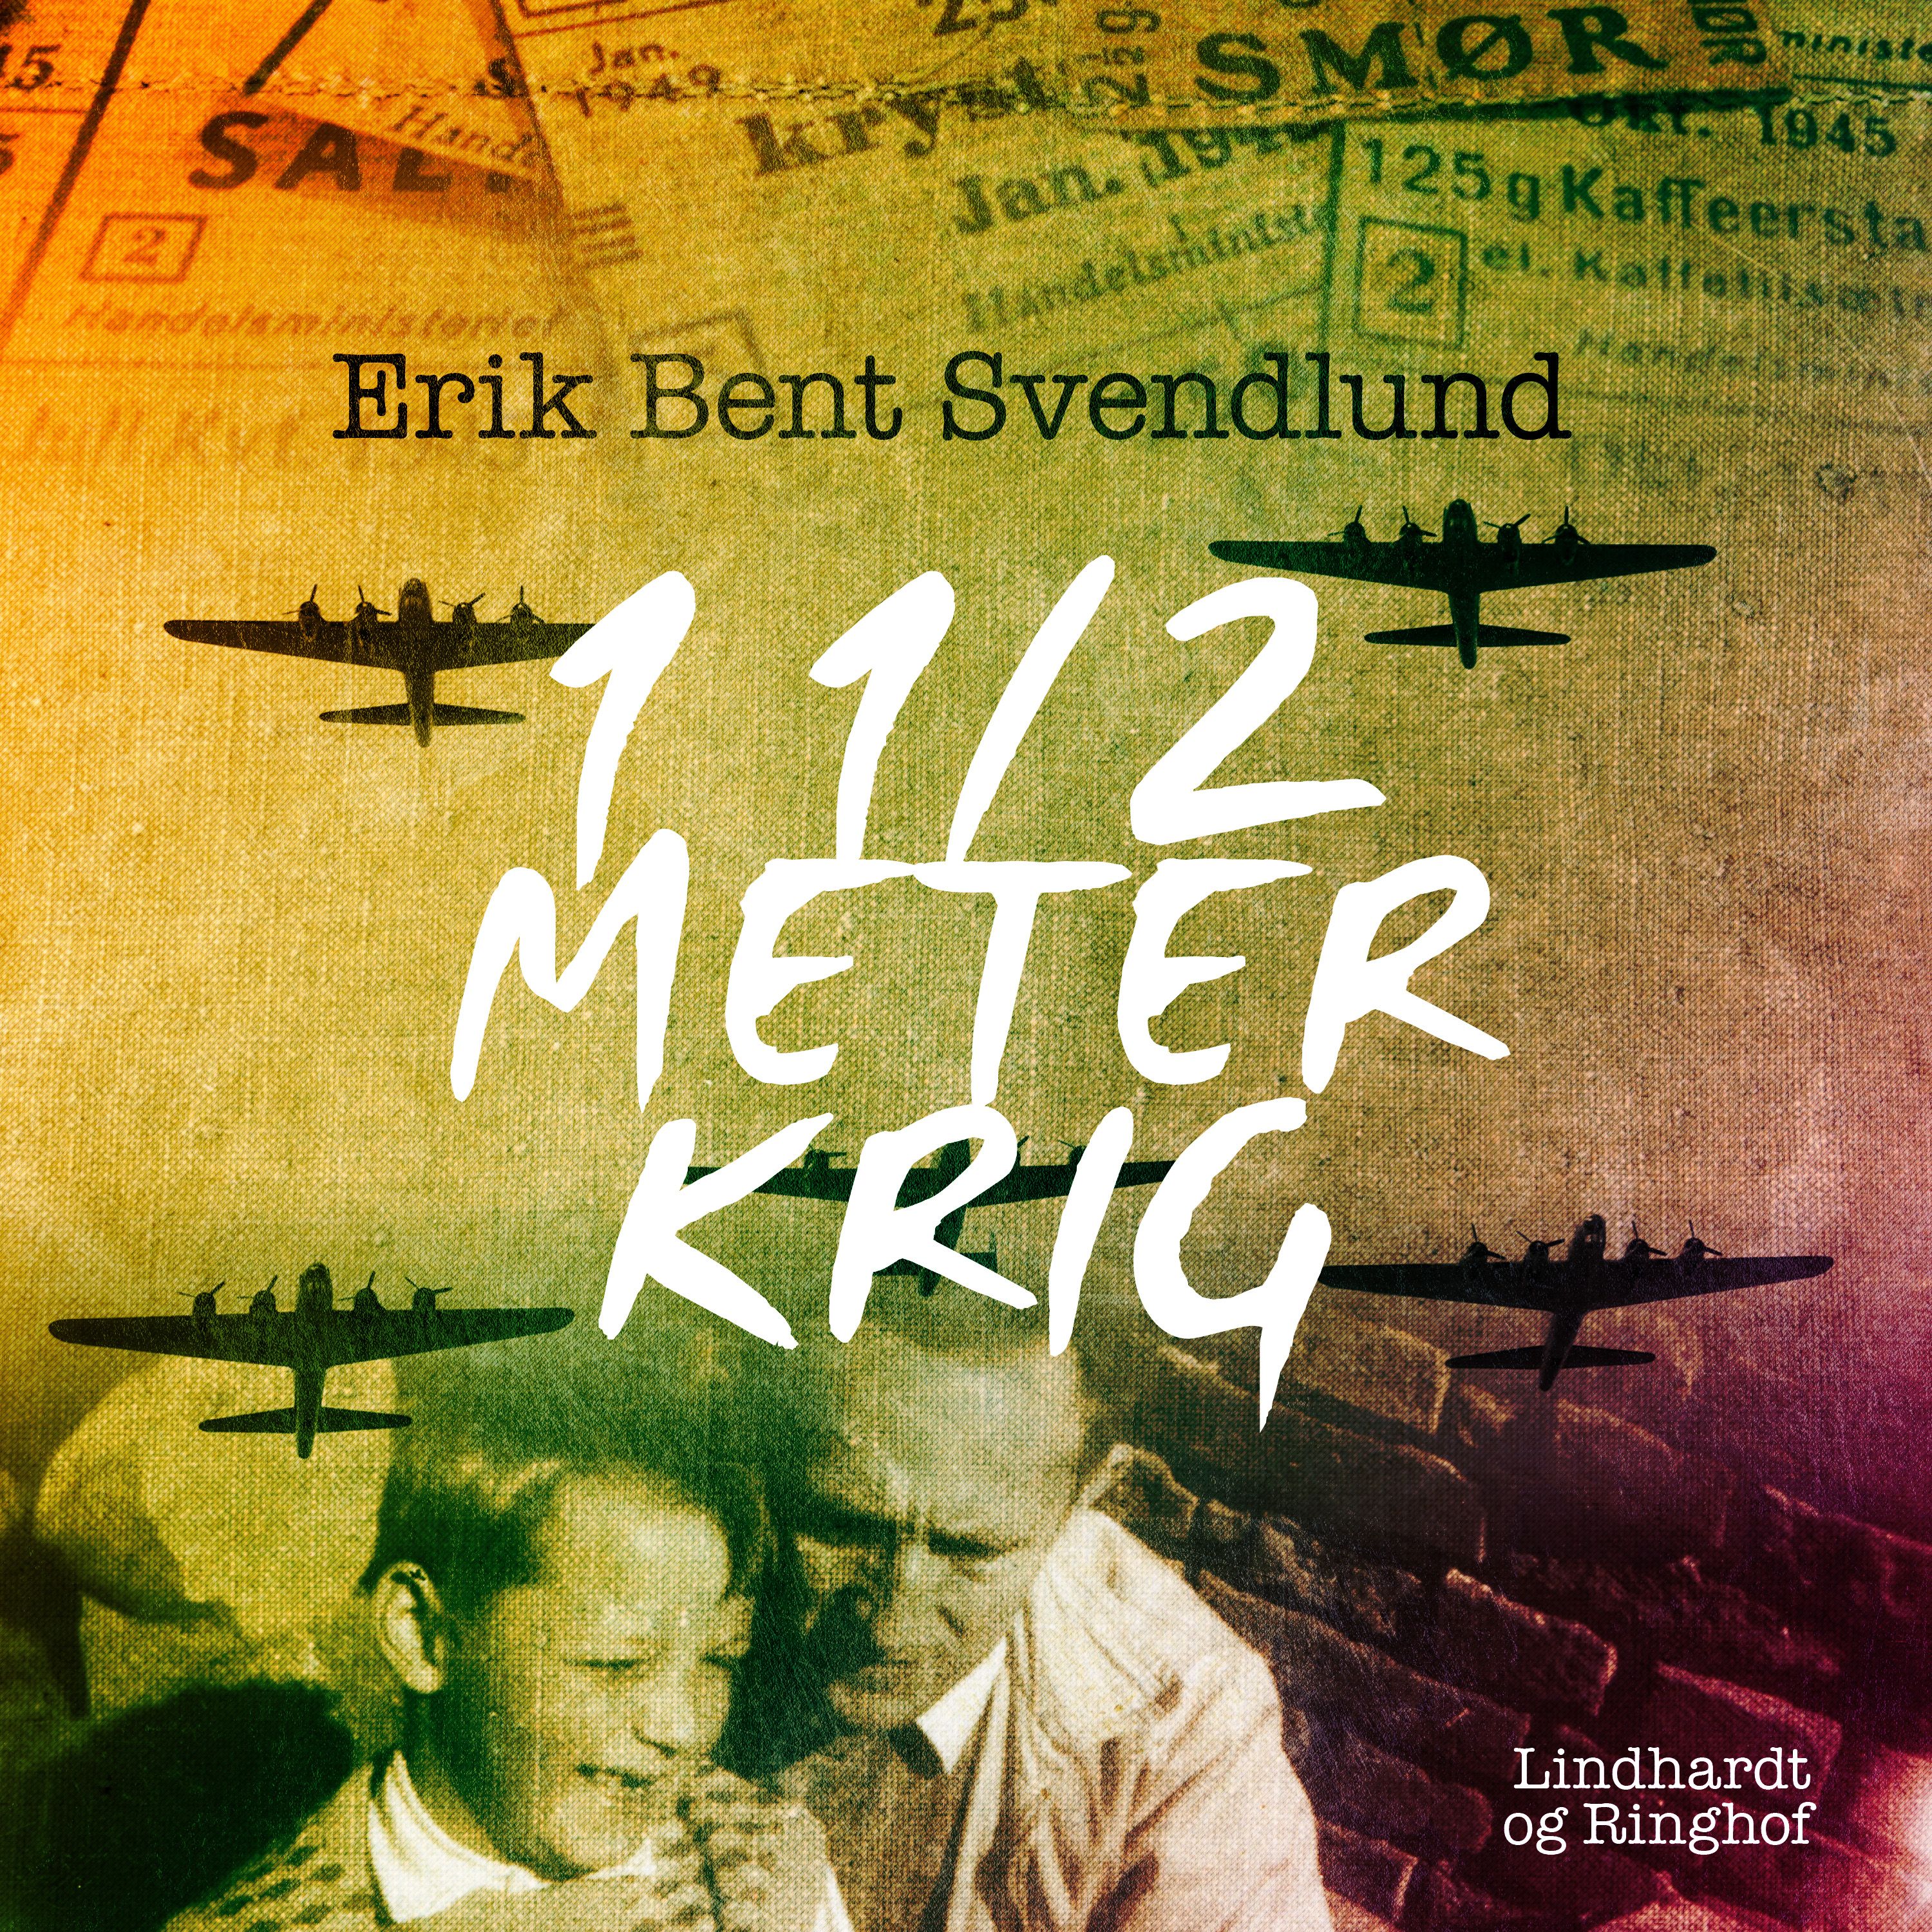 1 1/2 meter krig, ljudbok av Erik Bent Svendlund